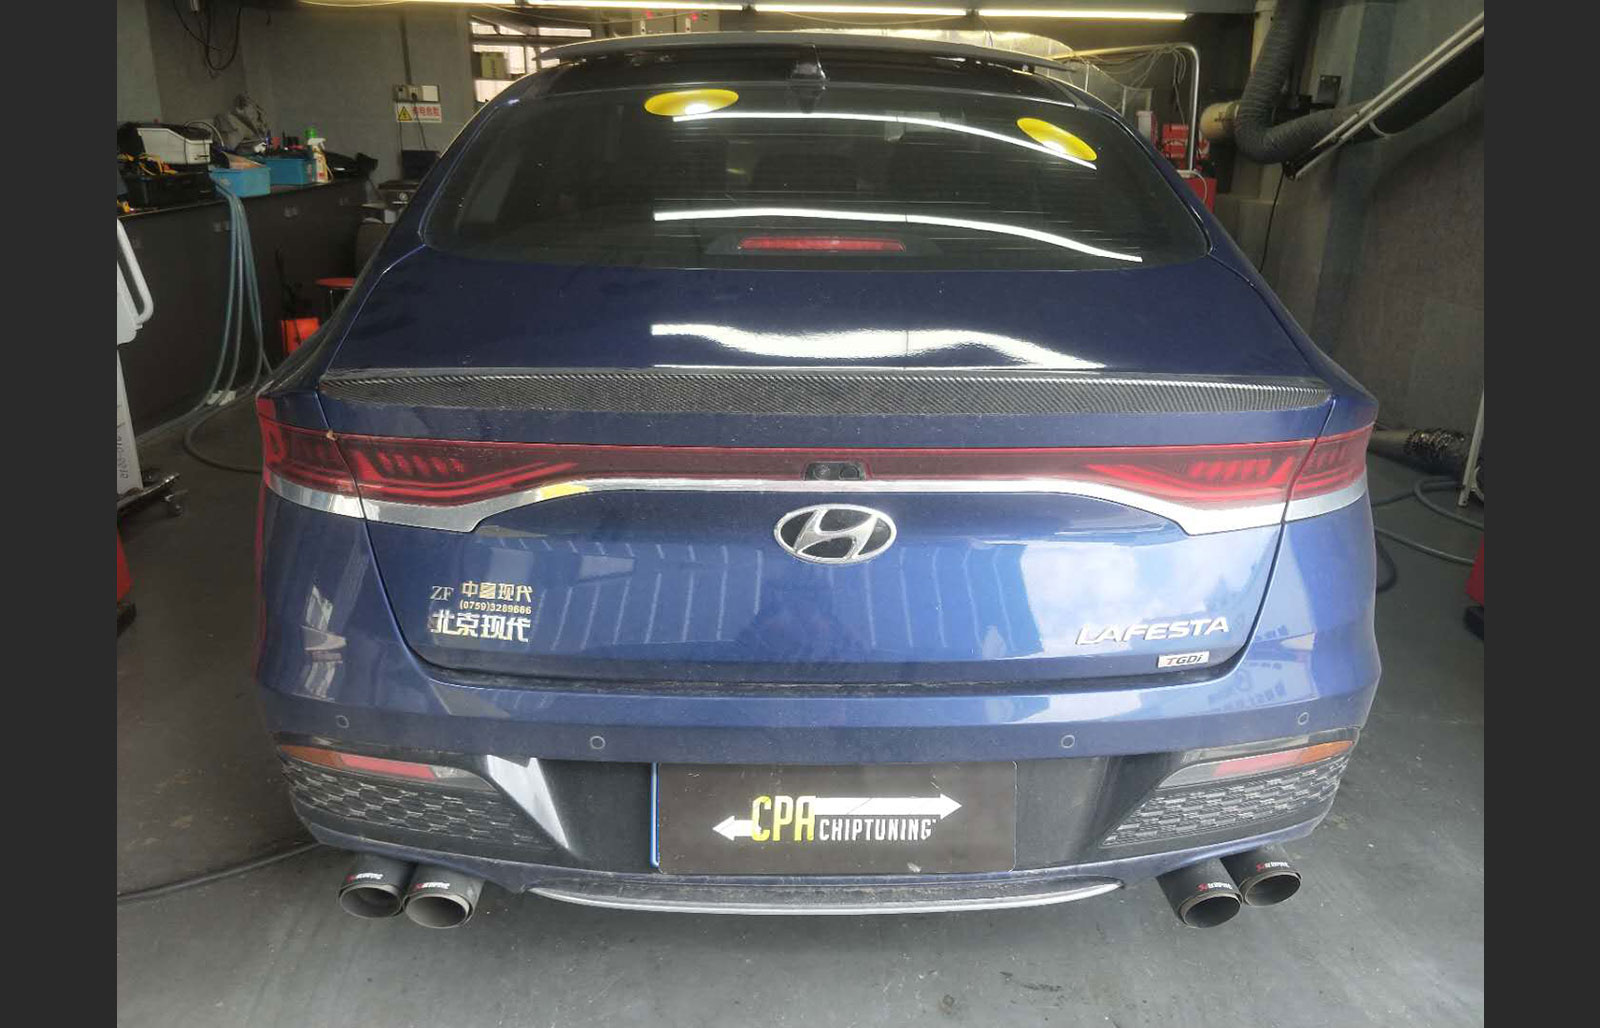 Hyundai Lafesta 1.6T チップチューニング